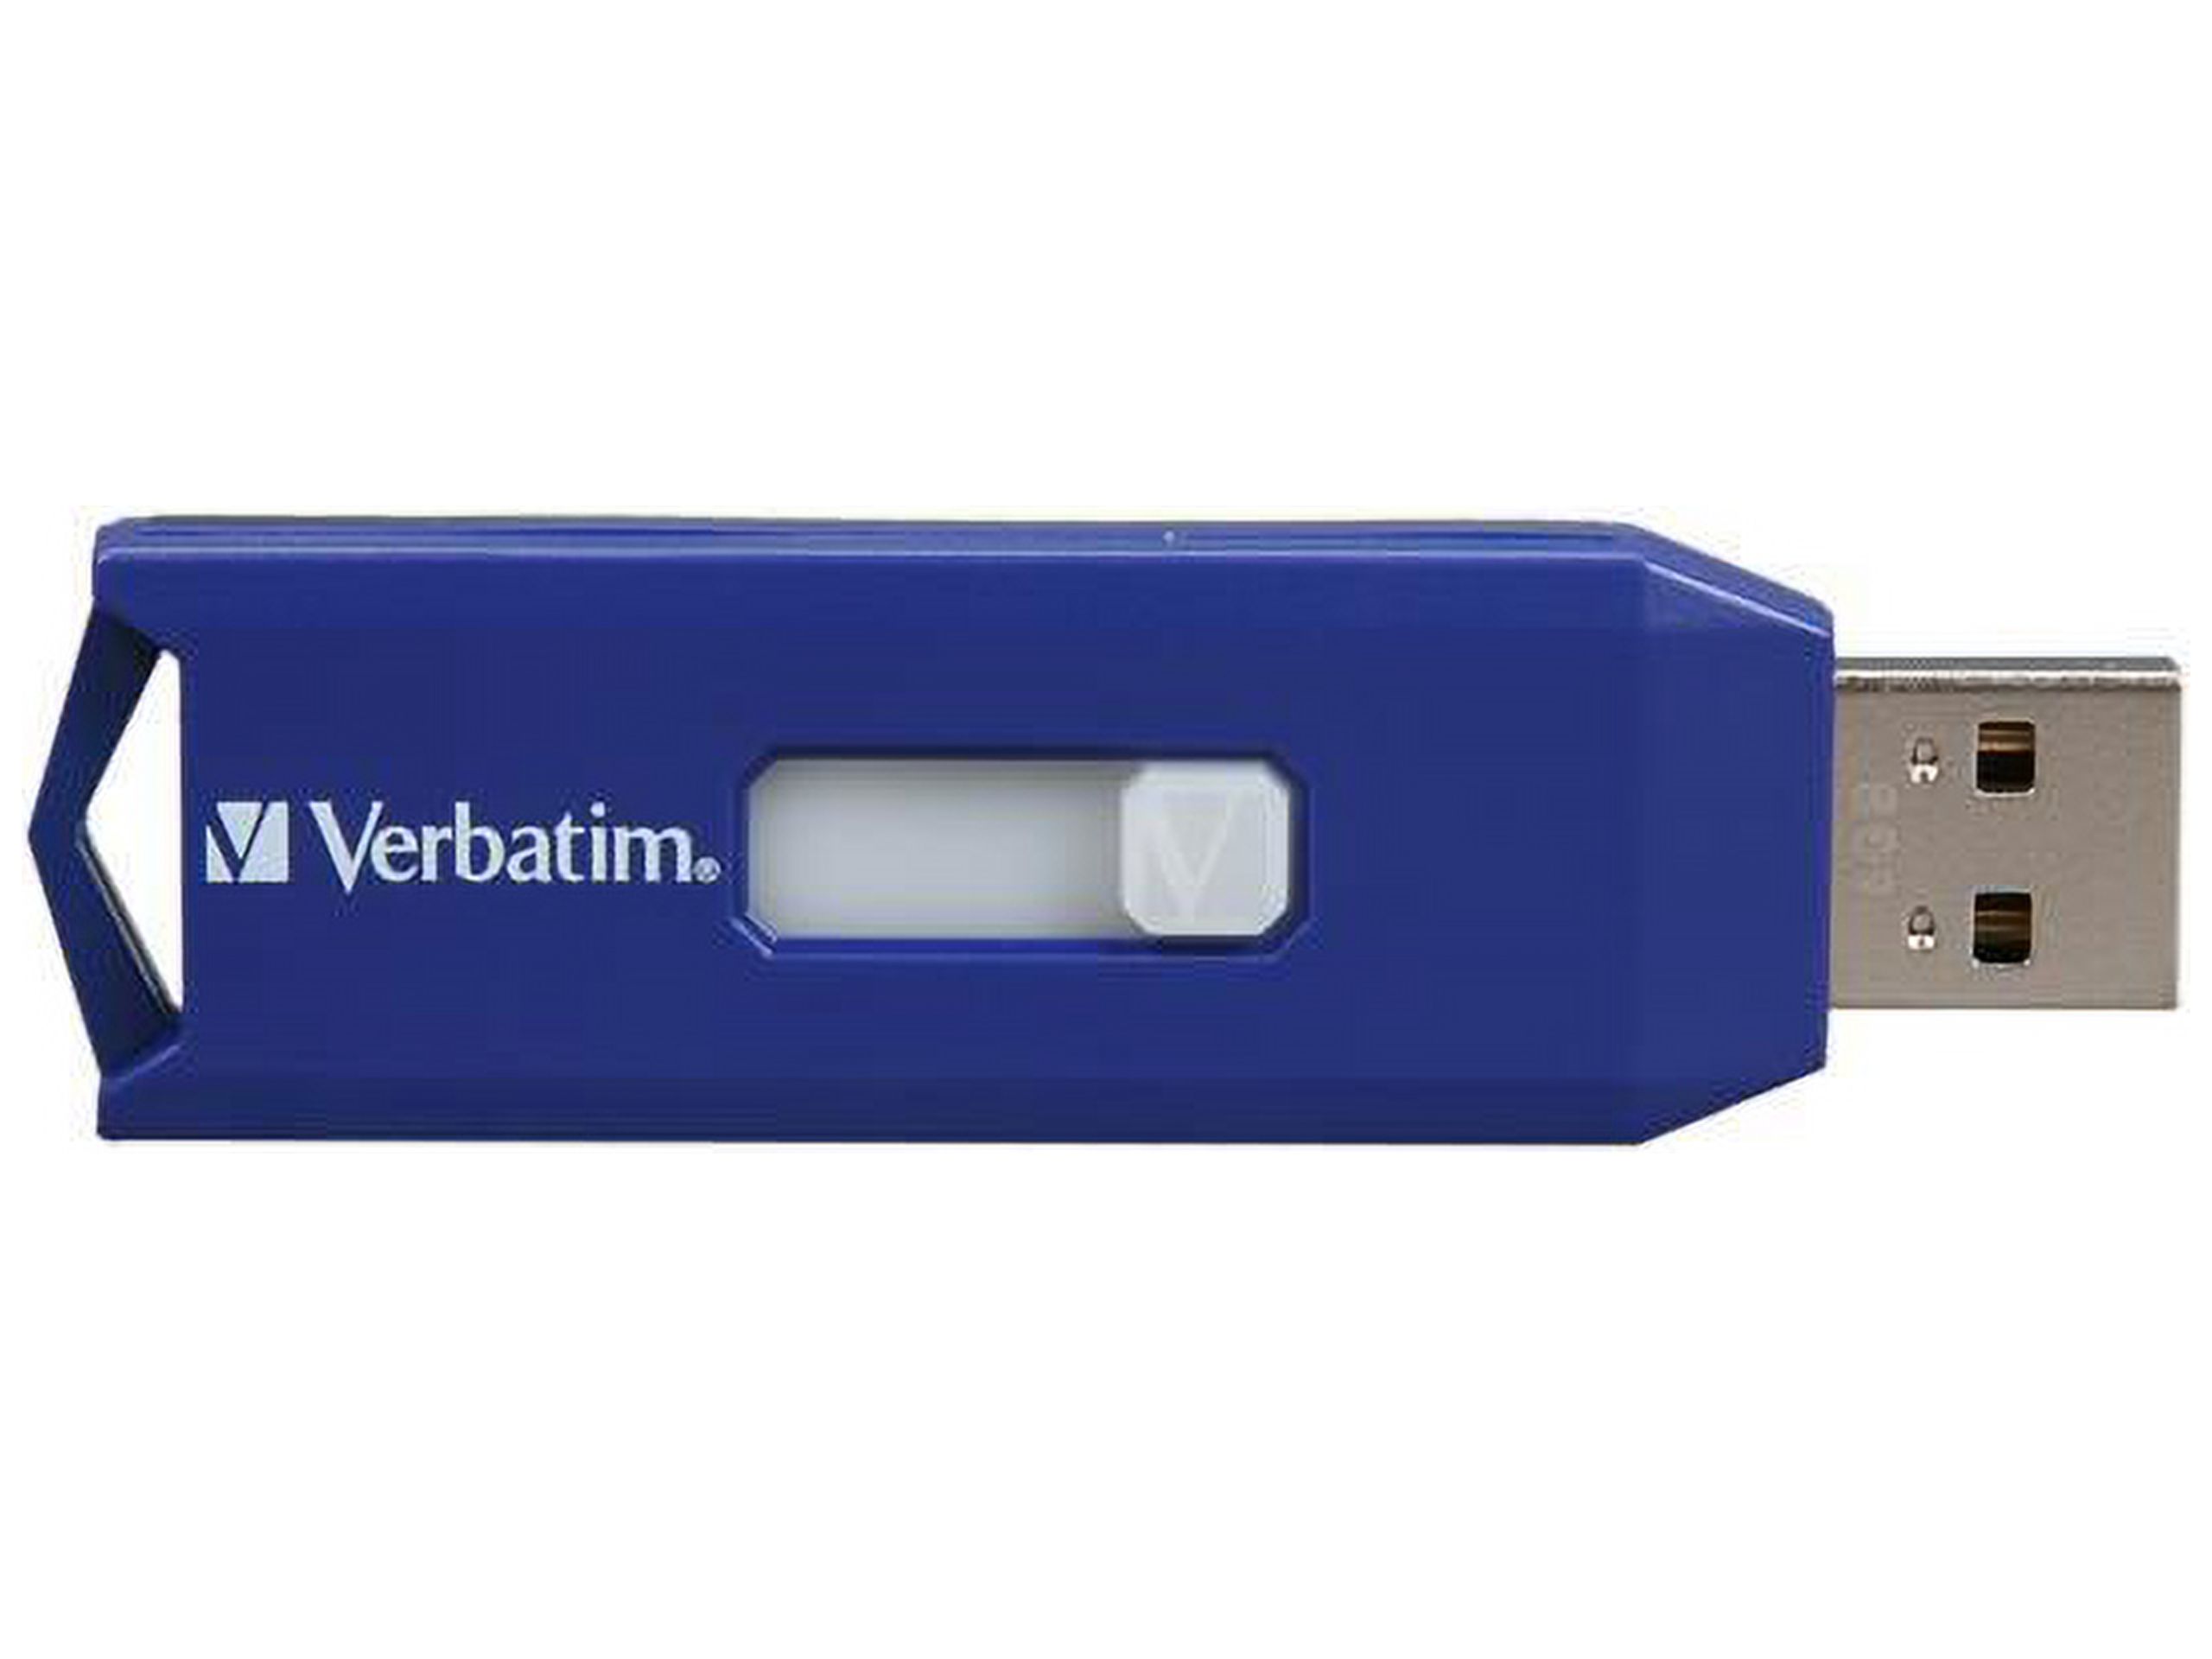 Verbatim Smart 8GB USB 2.0 Flash Drive Model 97088 - image 2 of 4